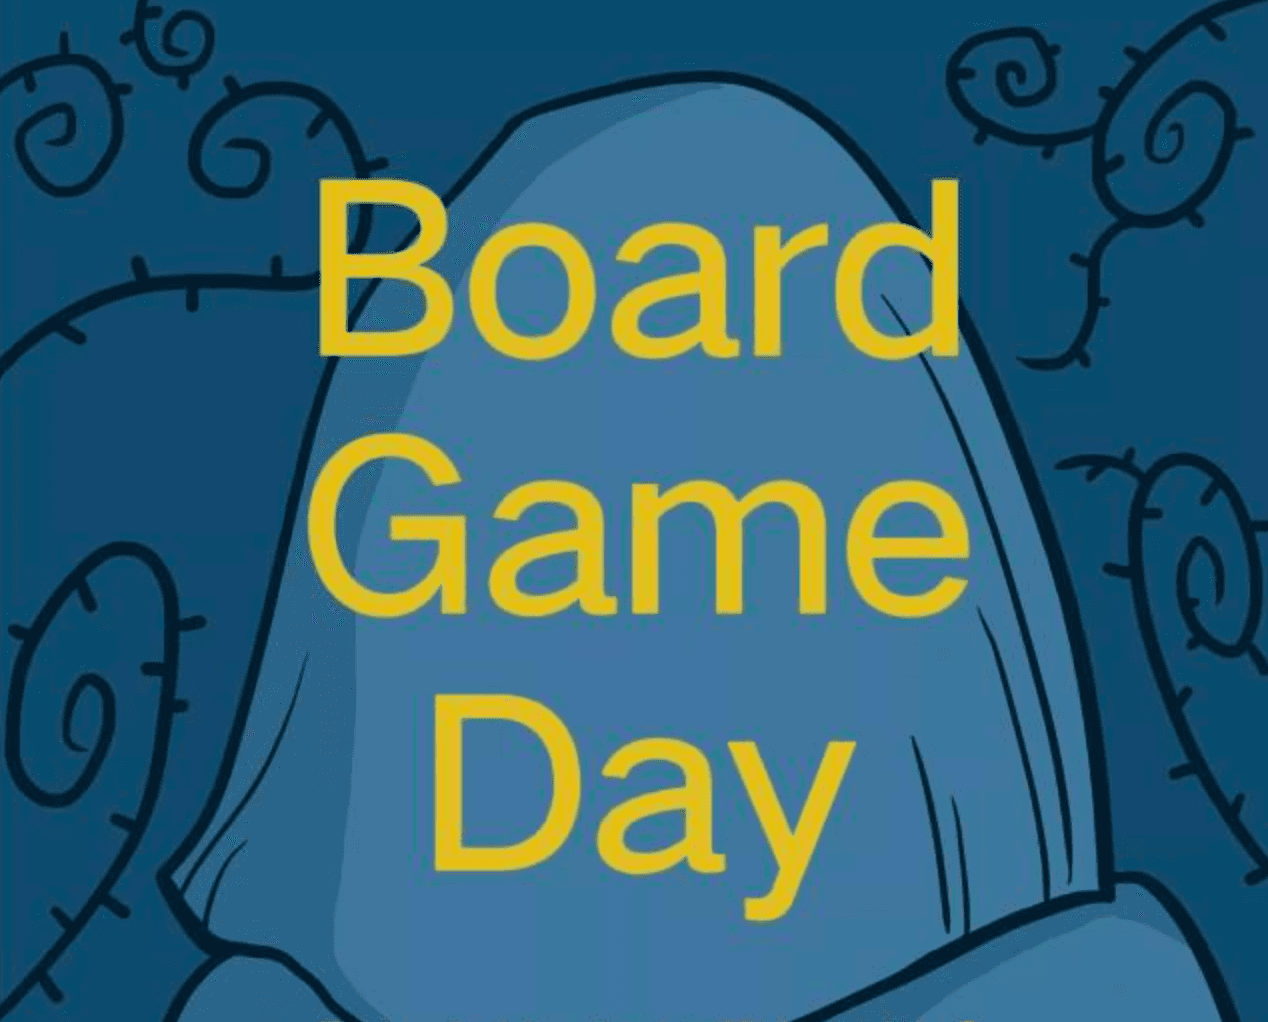 board game event chengdu expat